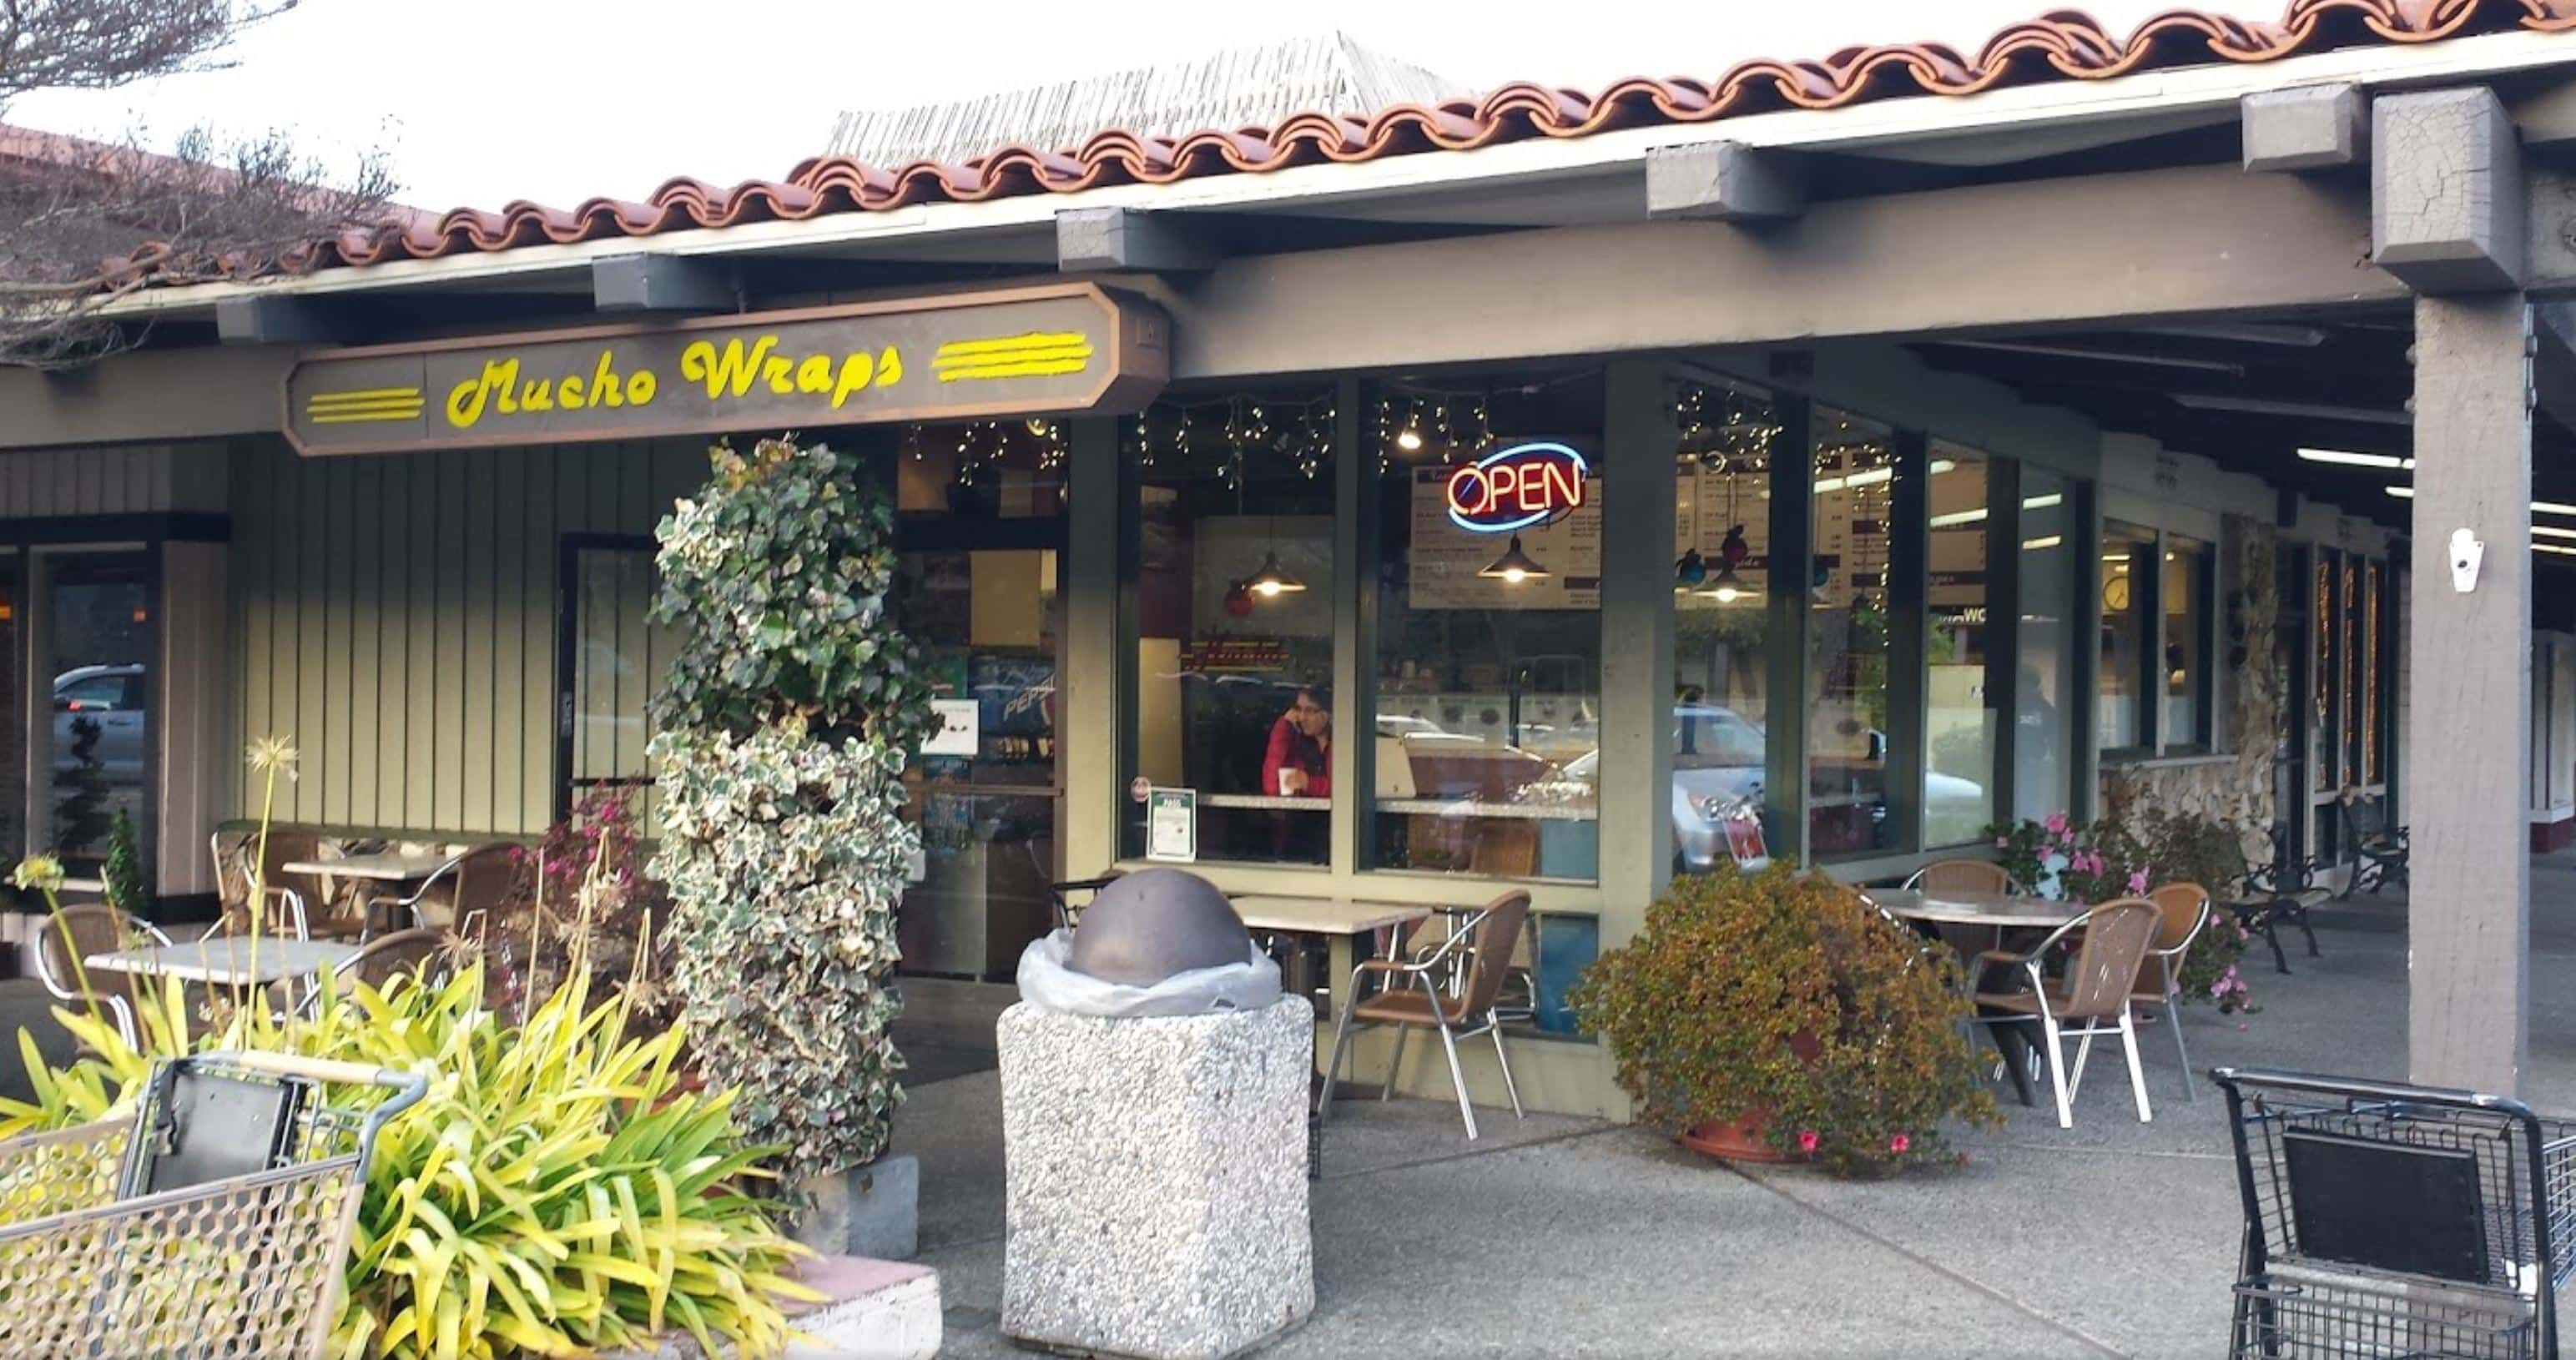 Mucho Wraps - Moraga, CA, US, restaurants by me